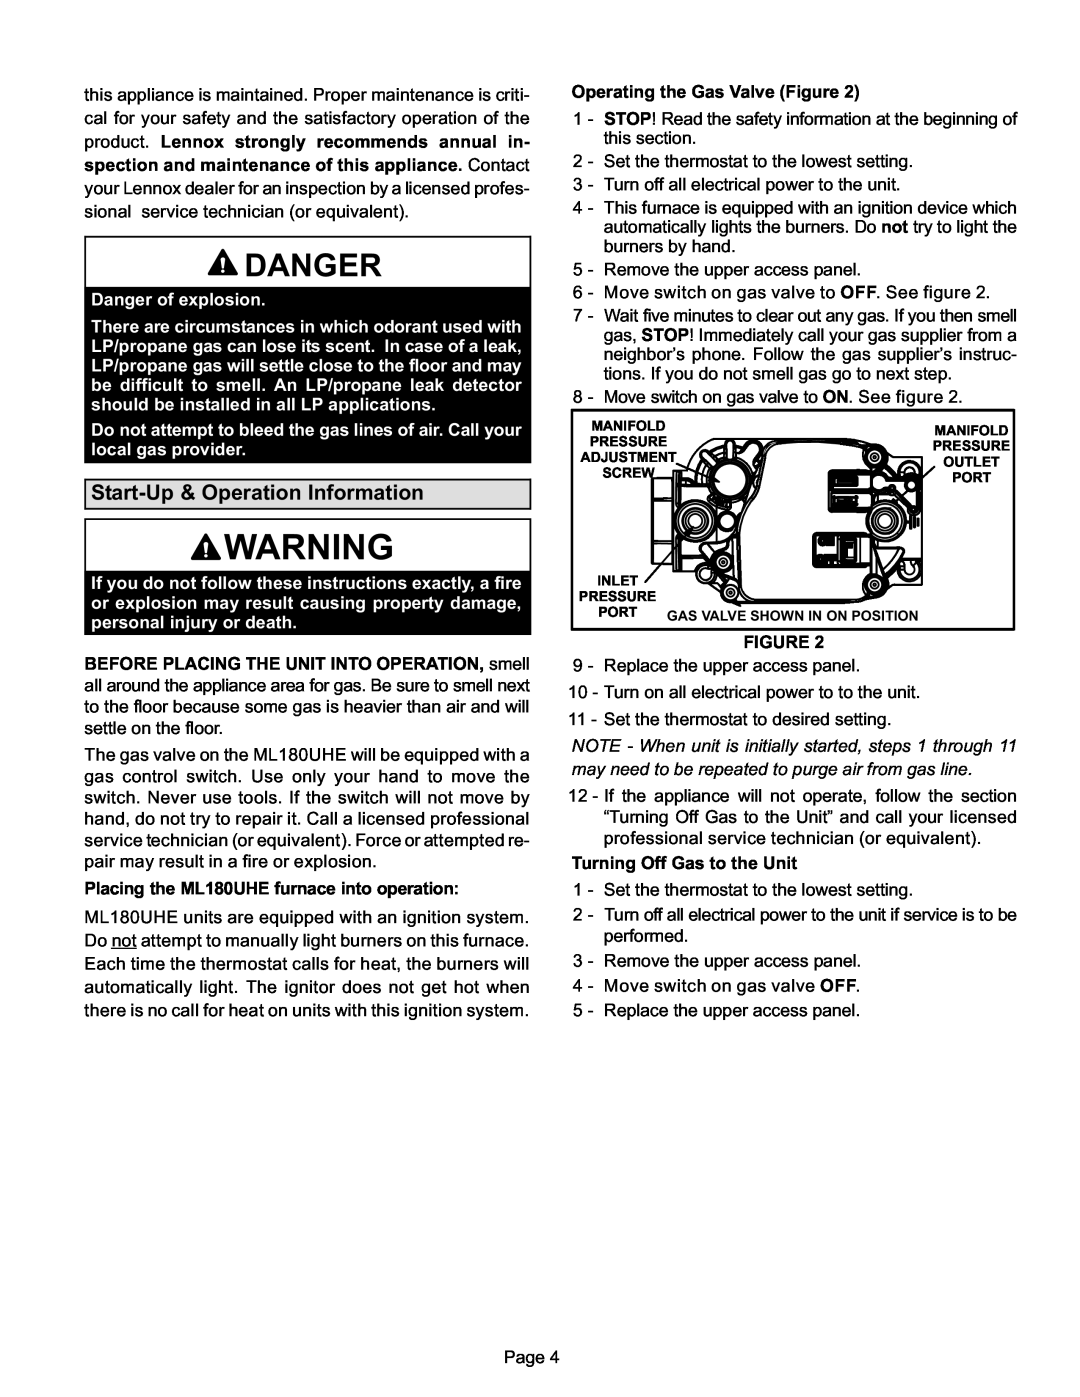 Lennox International Inc Gas Furnace, ML180UHE manual Danger, Start−Up & Operation Information 